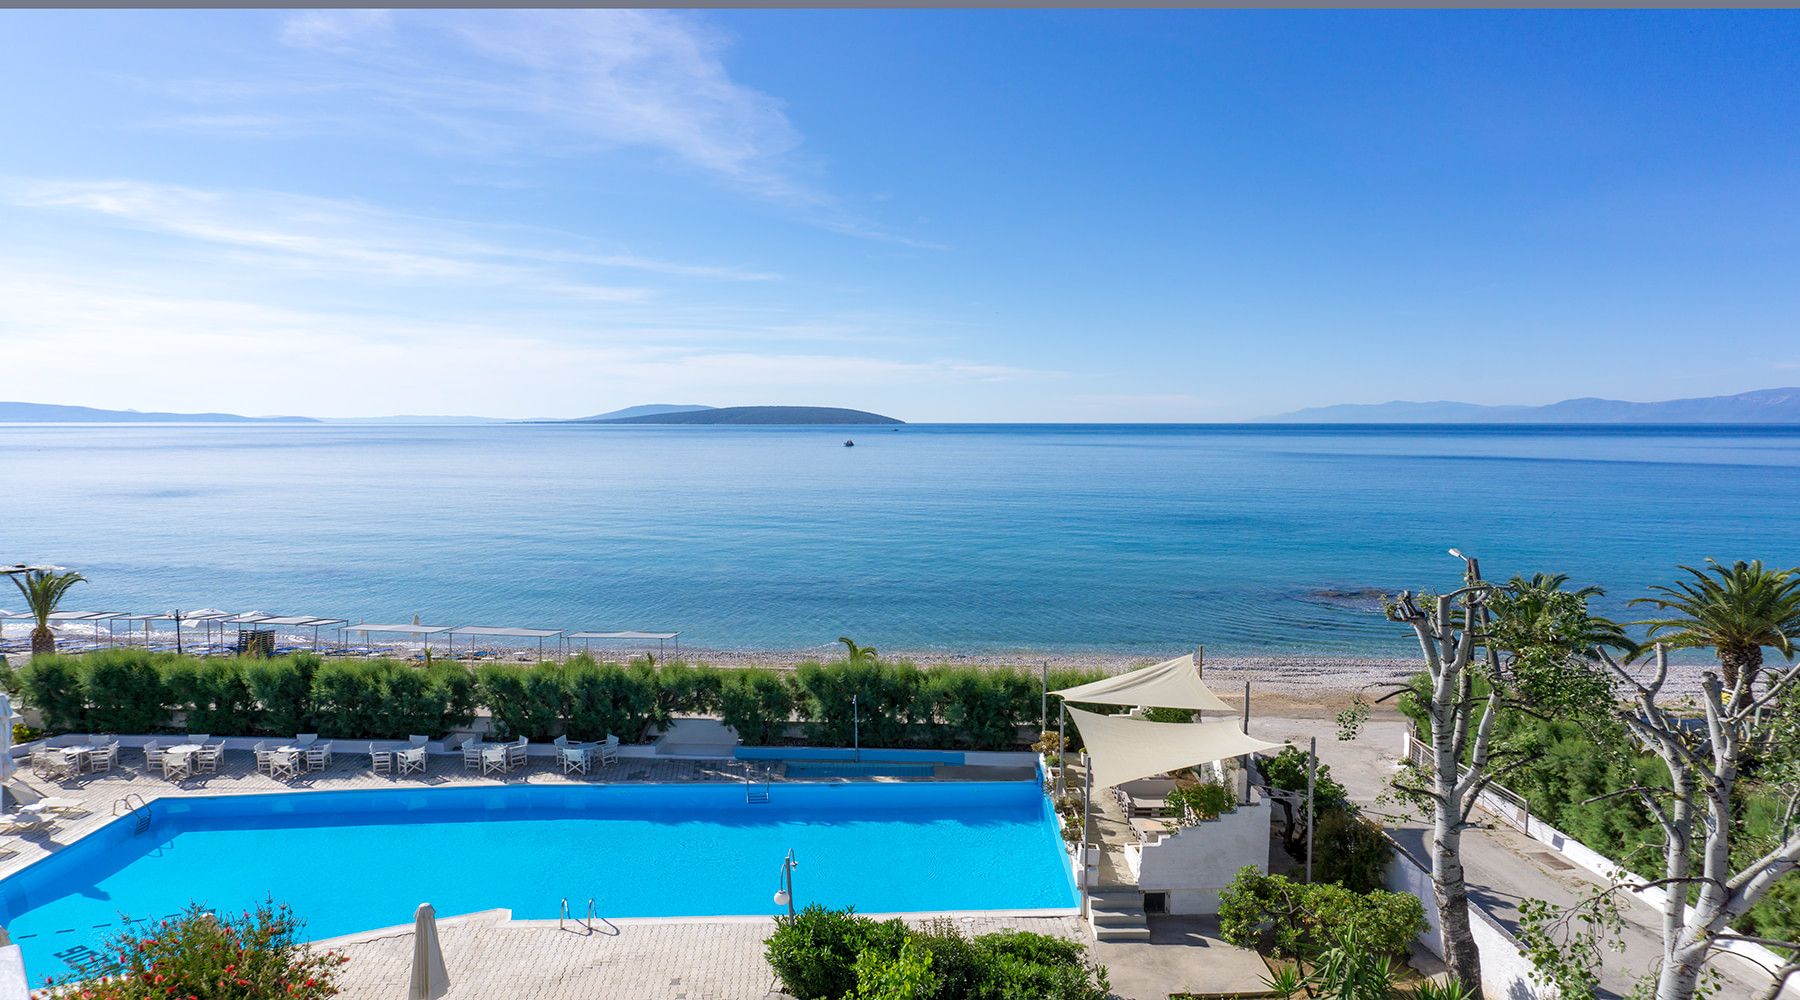 4* The Grove Seaside Hotel - Ναύπλιο ✦ -35% ✦ 4 Ημέρες